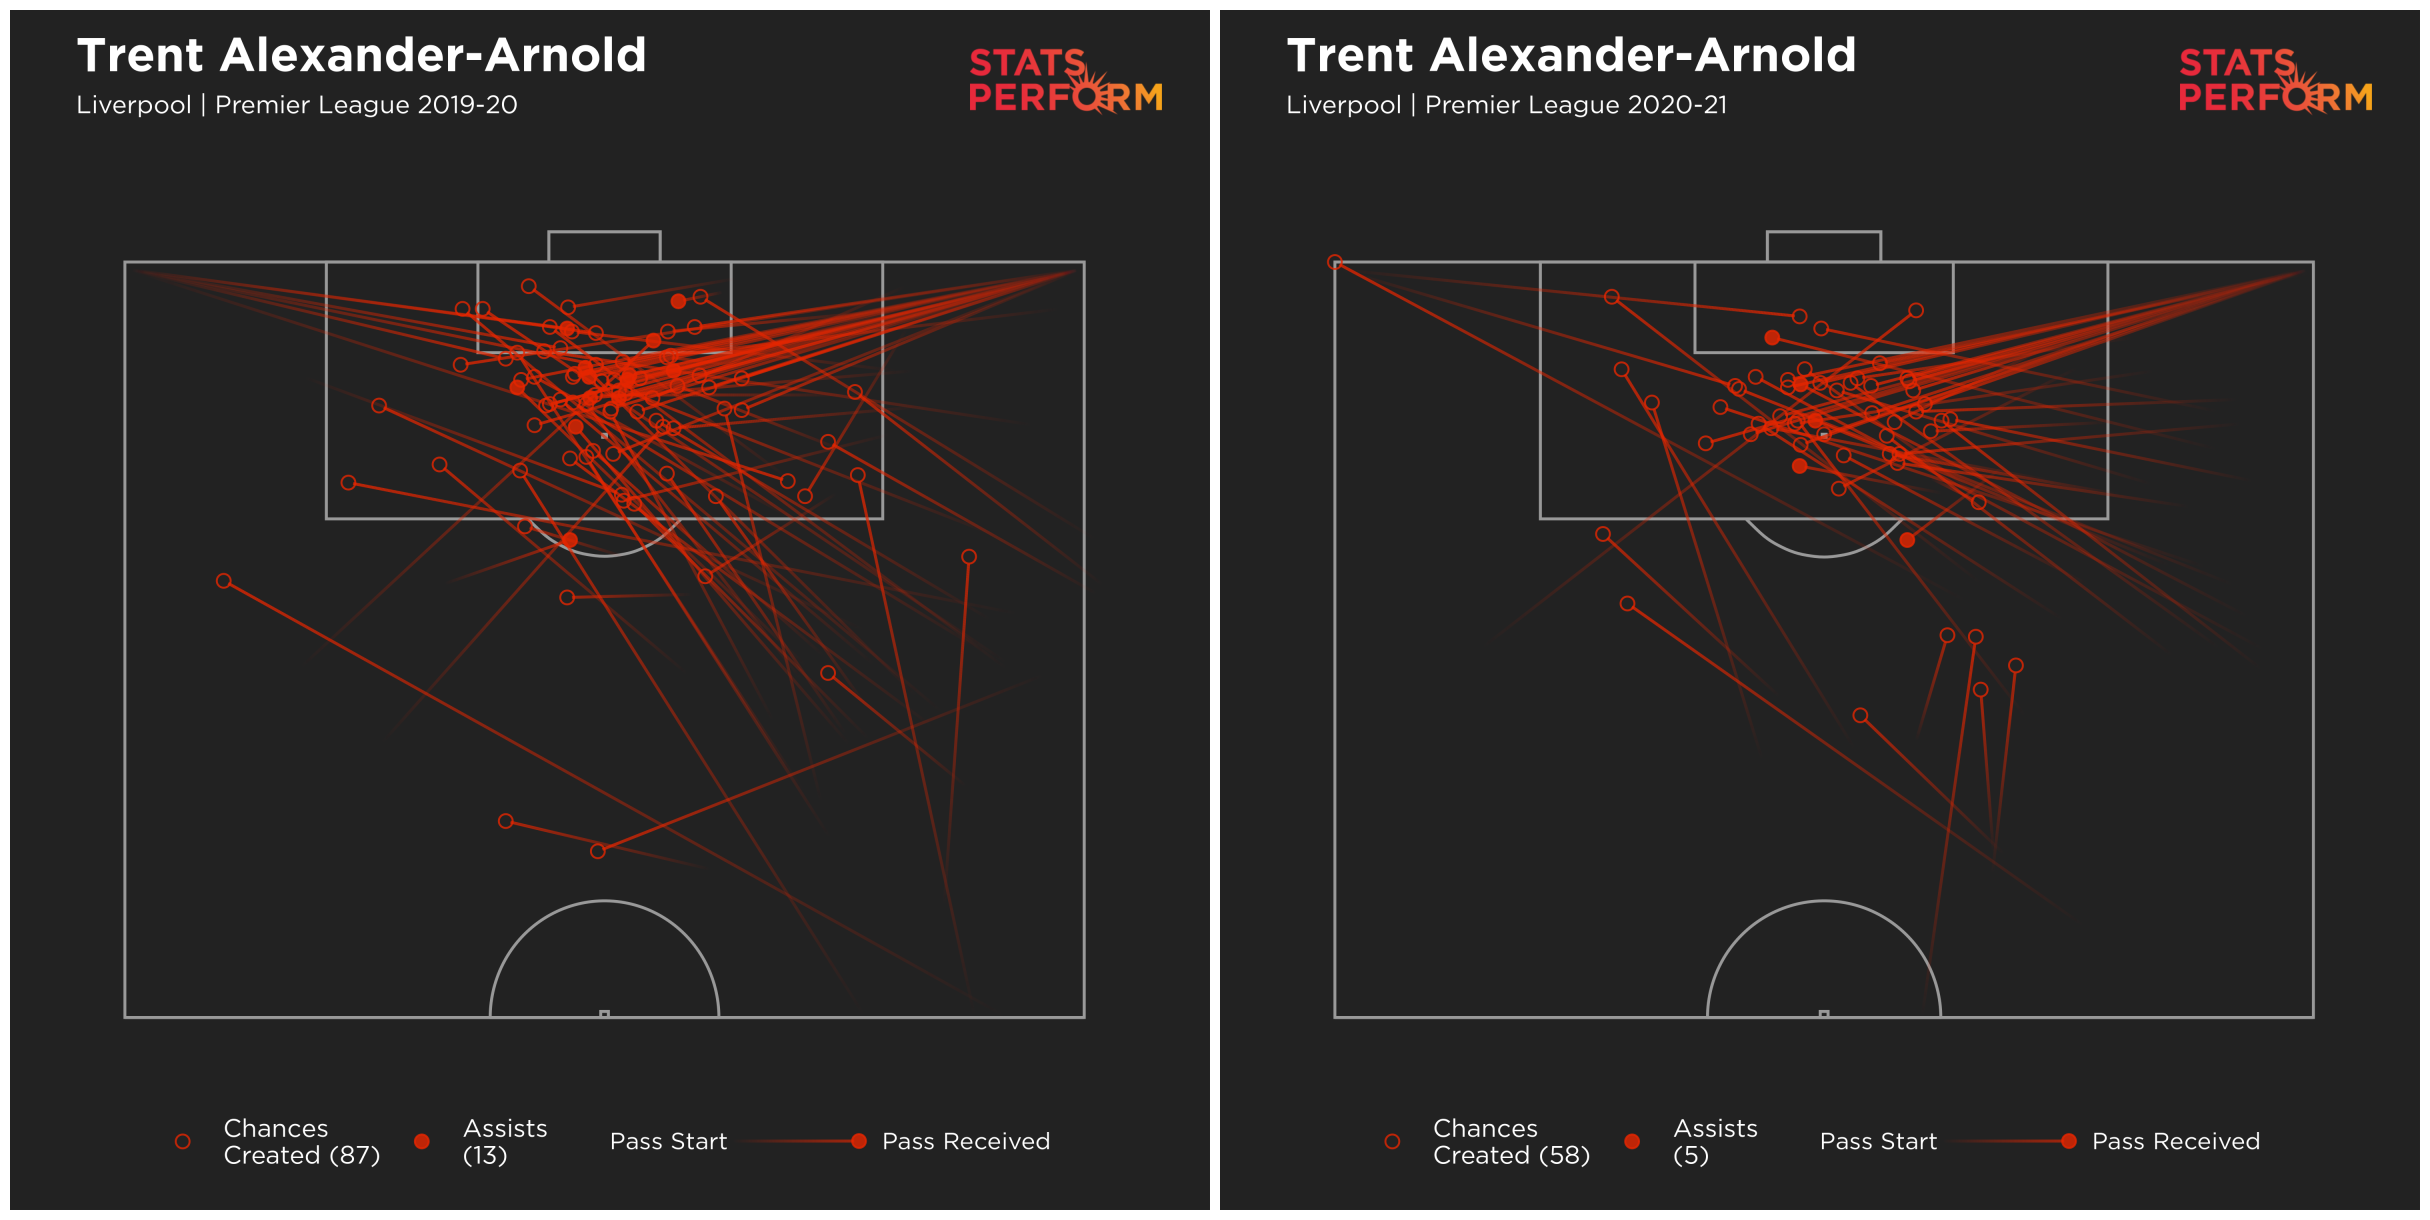 Trent Alexander-Arnold remains a regular source of chances